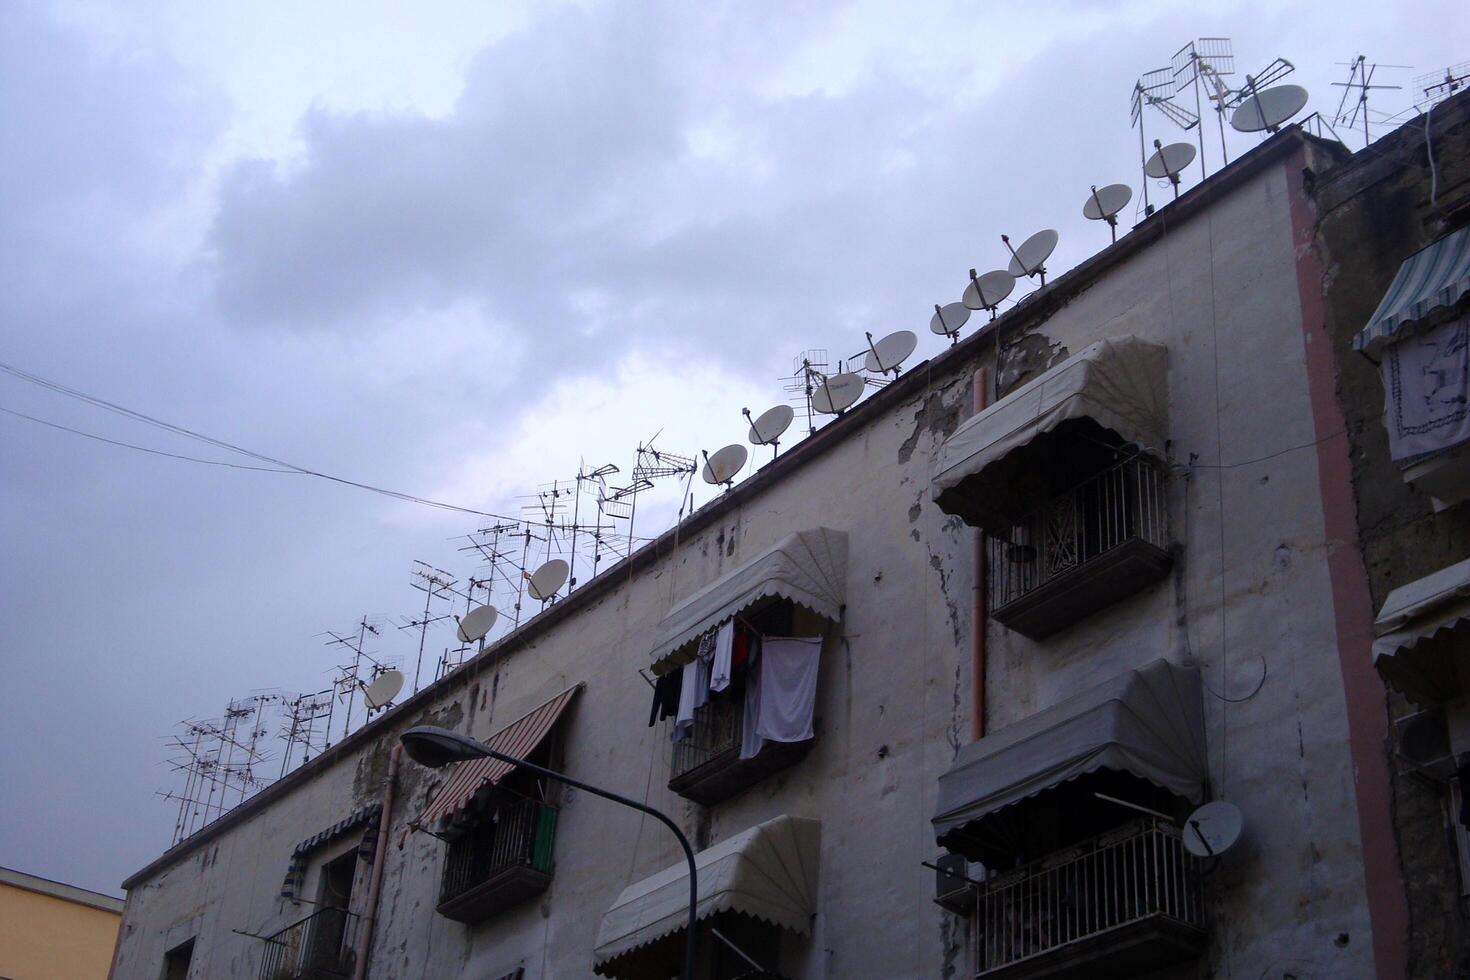 Neapel, Italien, Europa - augusti 15, 2019 satellit maträtter på de tak av en stadens centrum byggnad foto